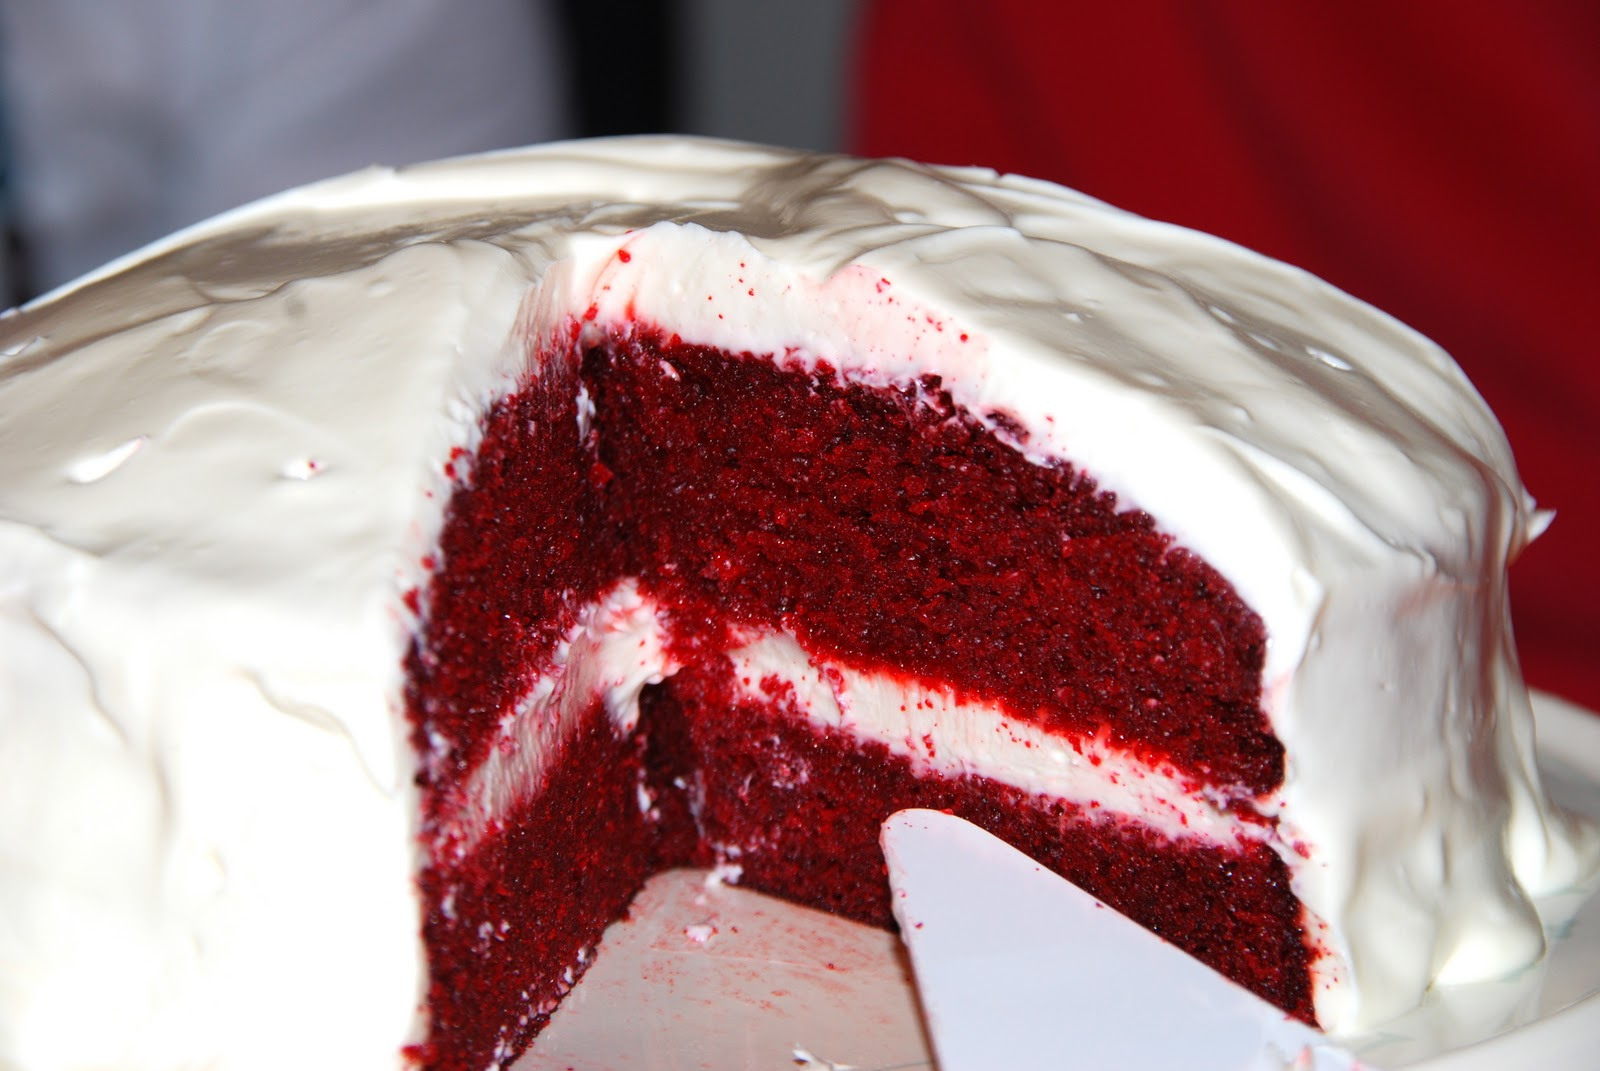 https://blogger.googleusercontent.com/img/b/R29vZ2xl/AVvXsEiOwnQbZExEmdJ7QkKpshuVGiEW_HLqjFnBAqFv_q0SLpqnJhsq4m34Zd3huh7RkLryeRejoOxE57kkIGULlaM9MRNA2AXlOld9GACSq6WxhGIKqQ46C1bZ7zvqRieYN1YjJWRBWTacWz0K/s1600/kek+red+velvet+merah+cake.PNG